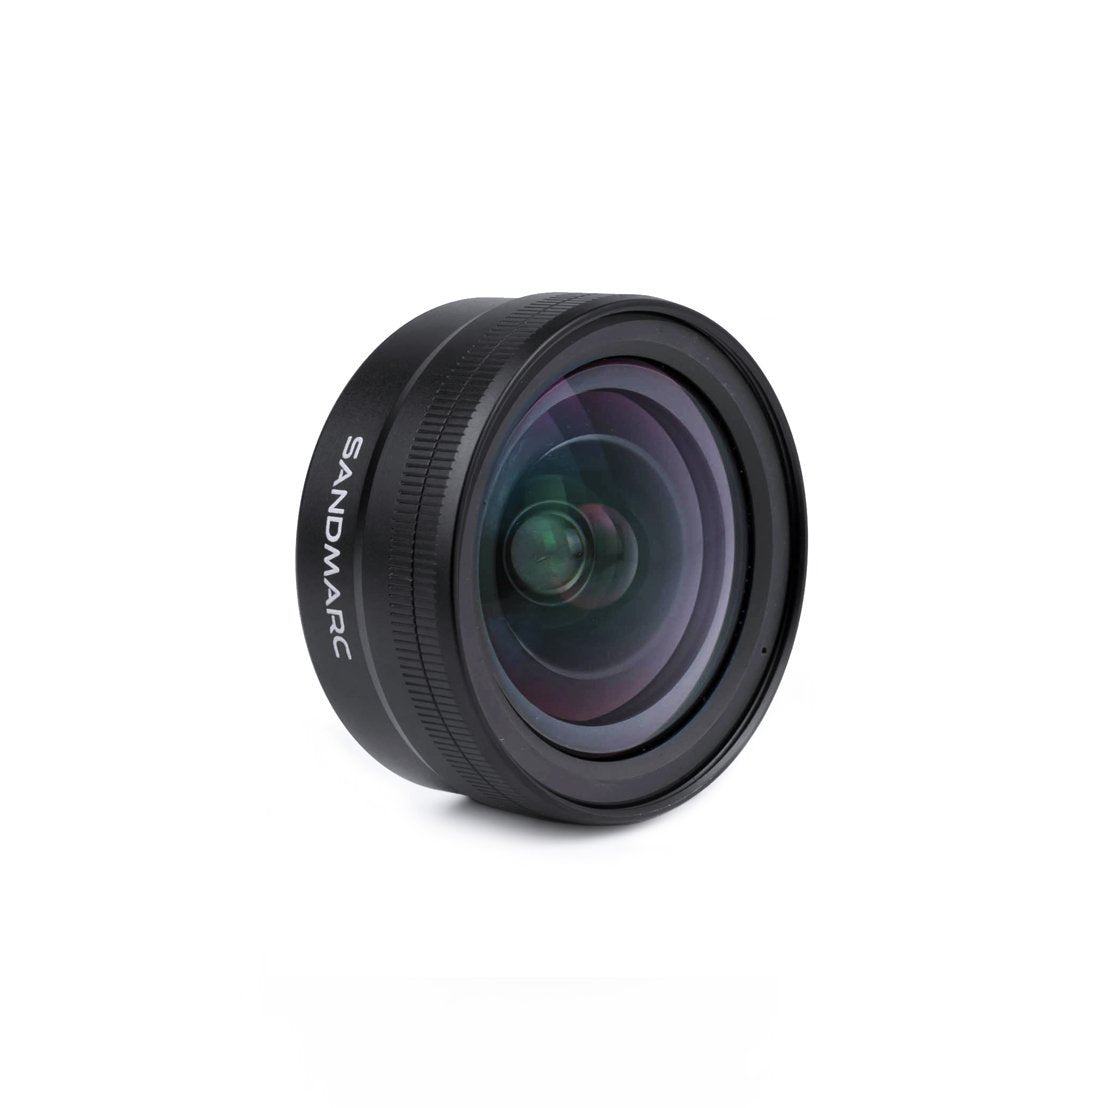 Wide Lens Edition - iPhone 11 Pro Max - SANDMARC